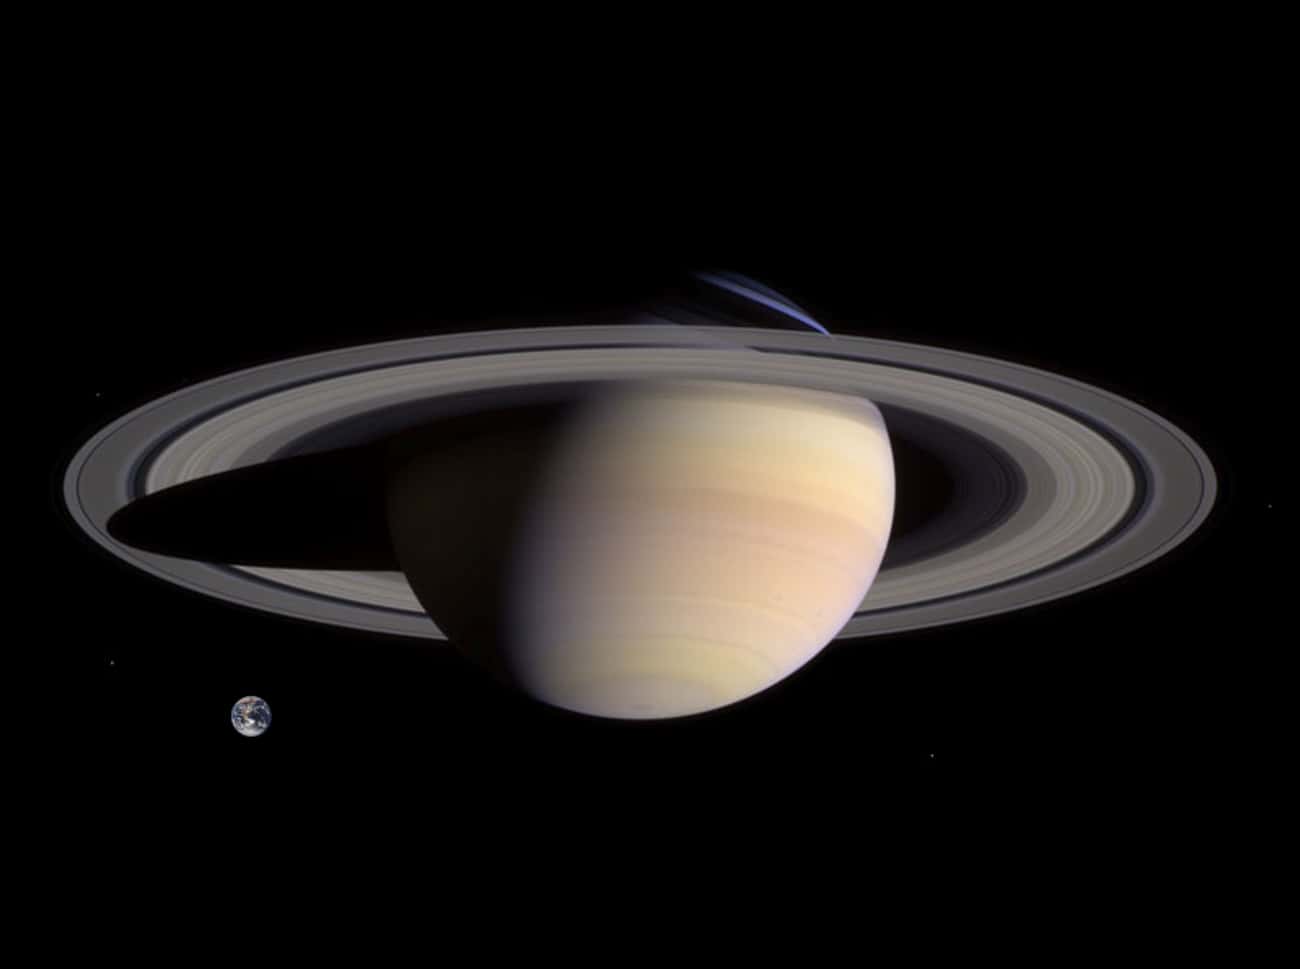 Earth Vs. Saturn